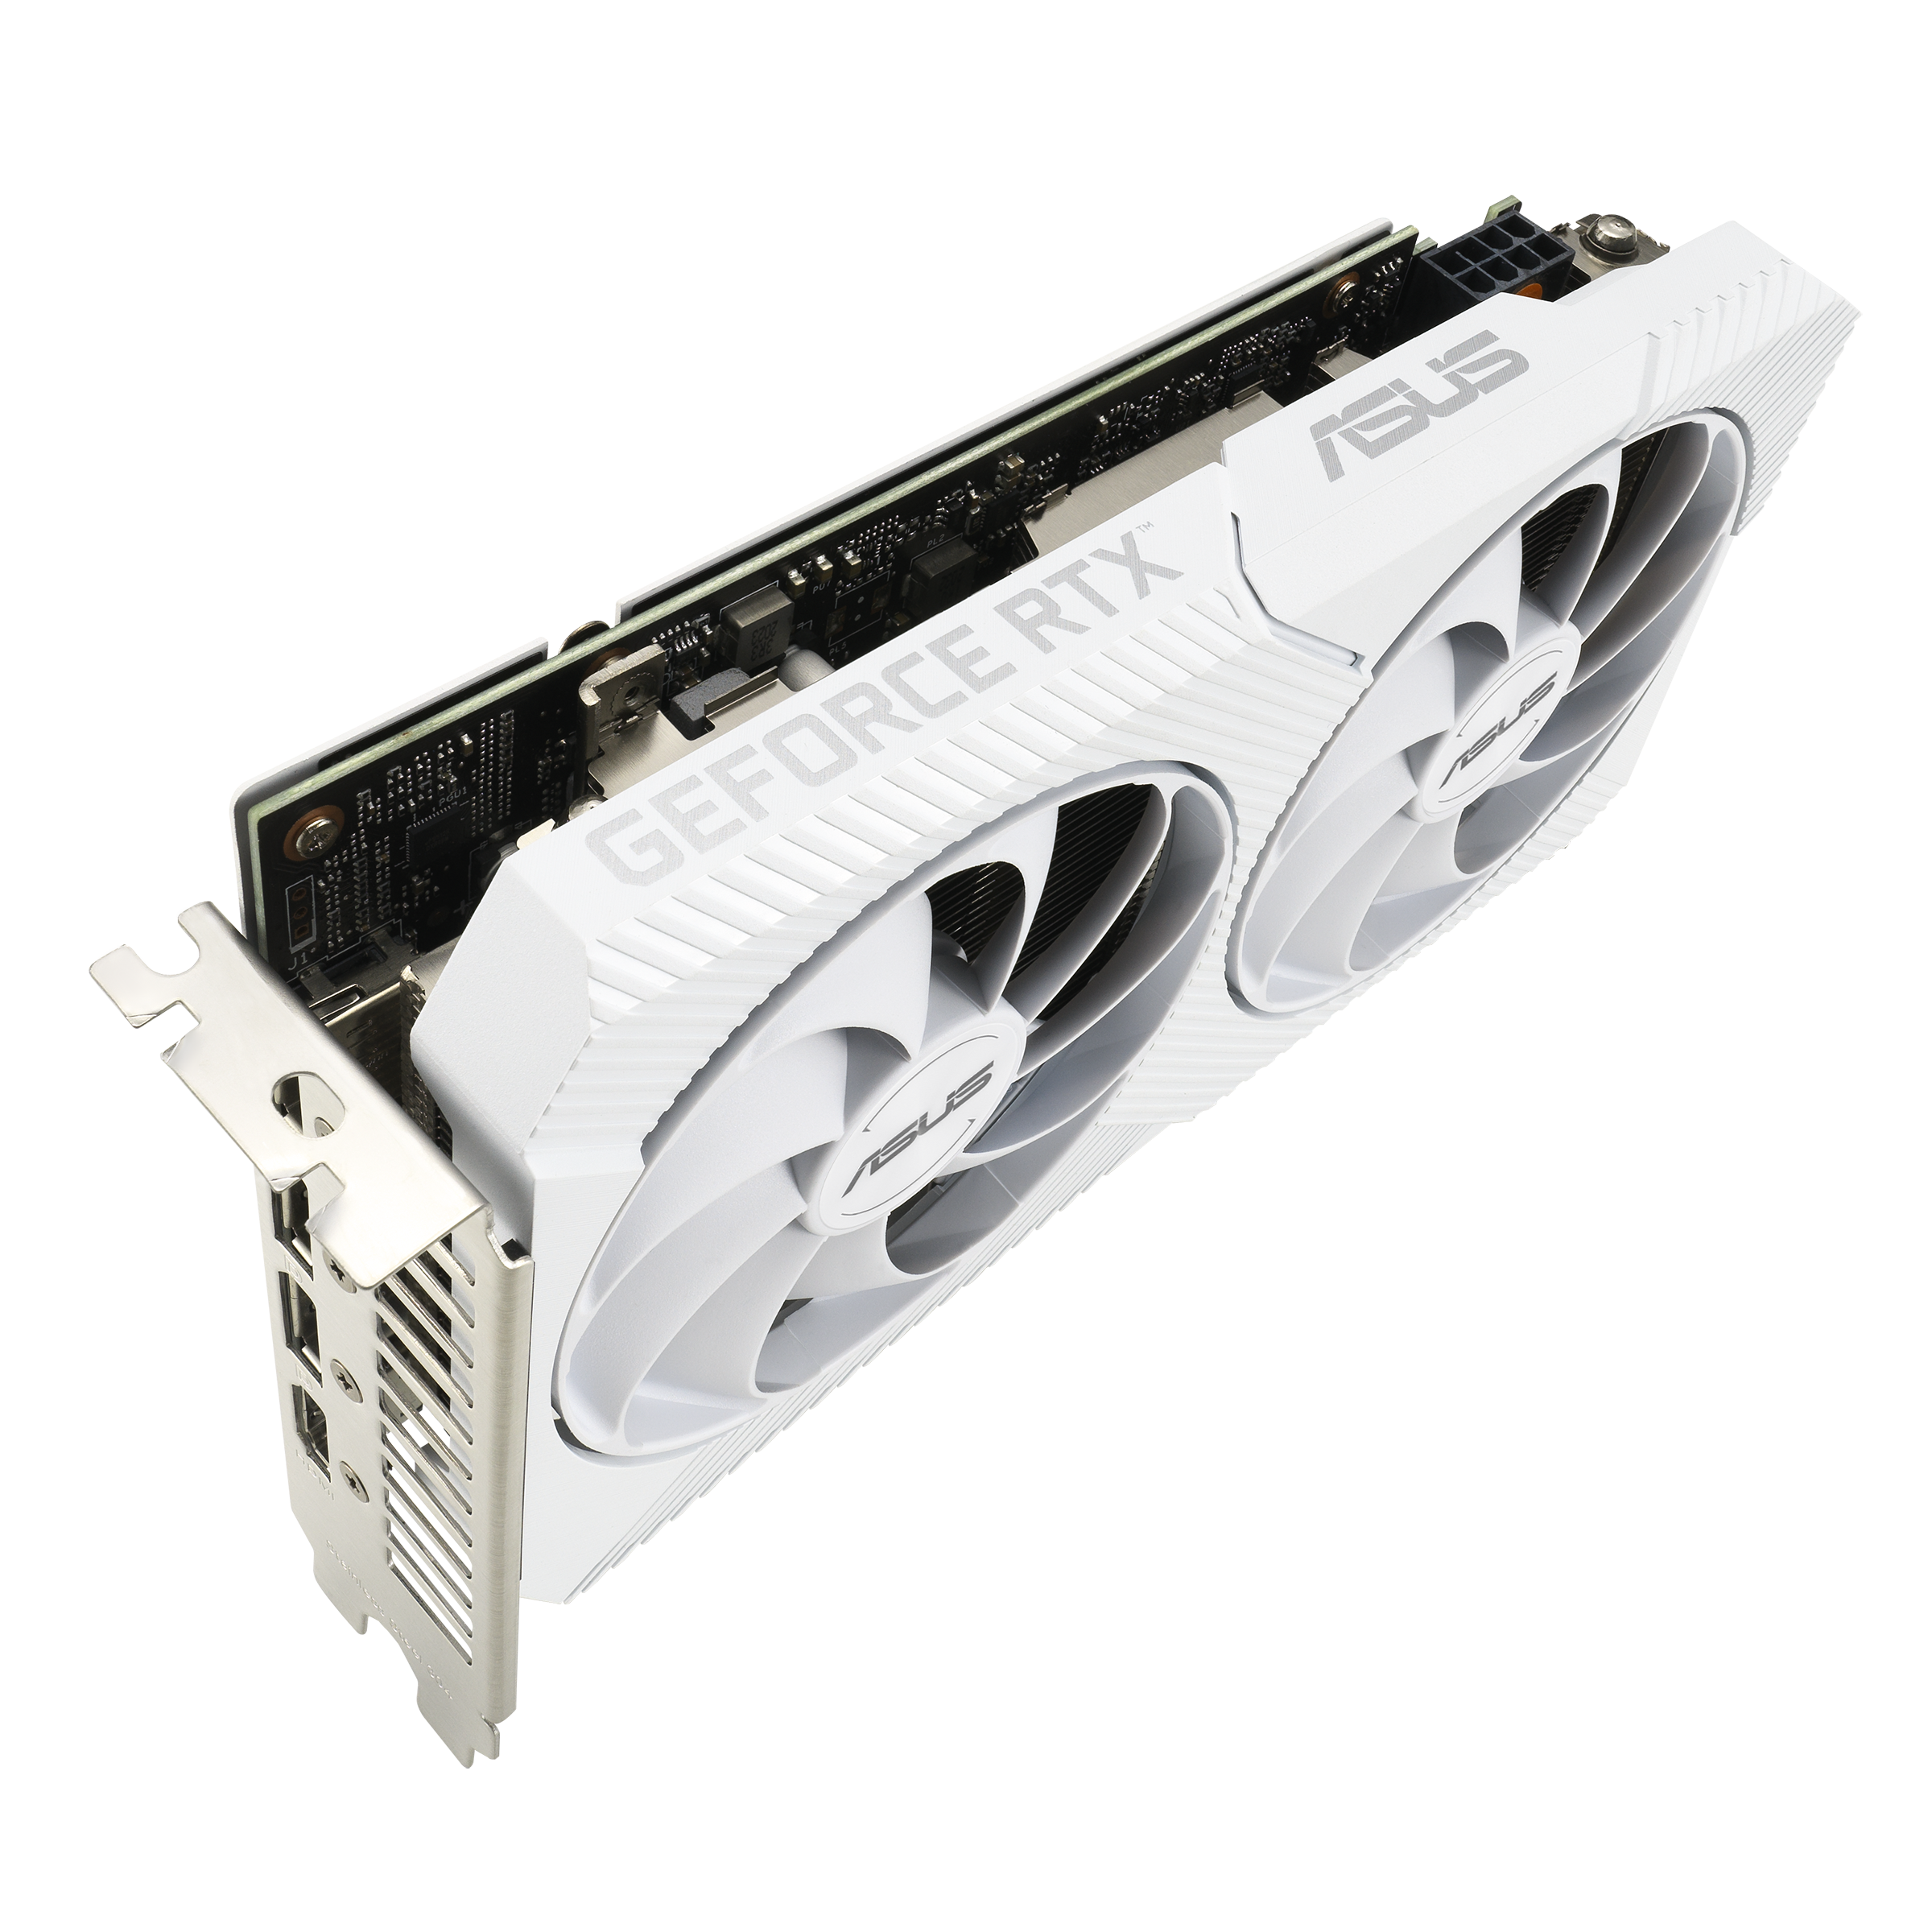 ASUS Dual GeForce RTX 3060 White OC Edition 8GB GDDR6 | Graphics